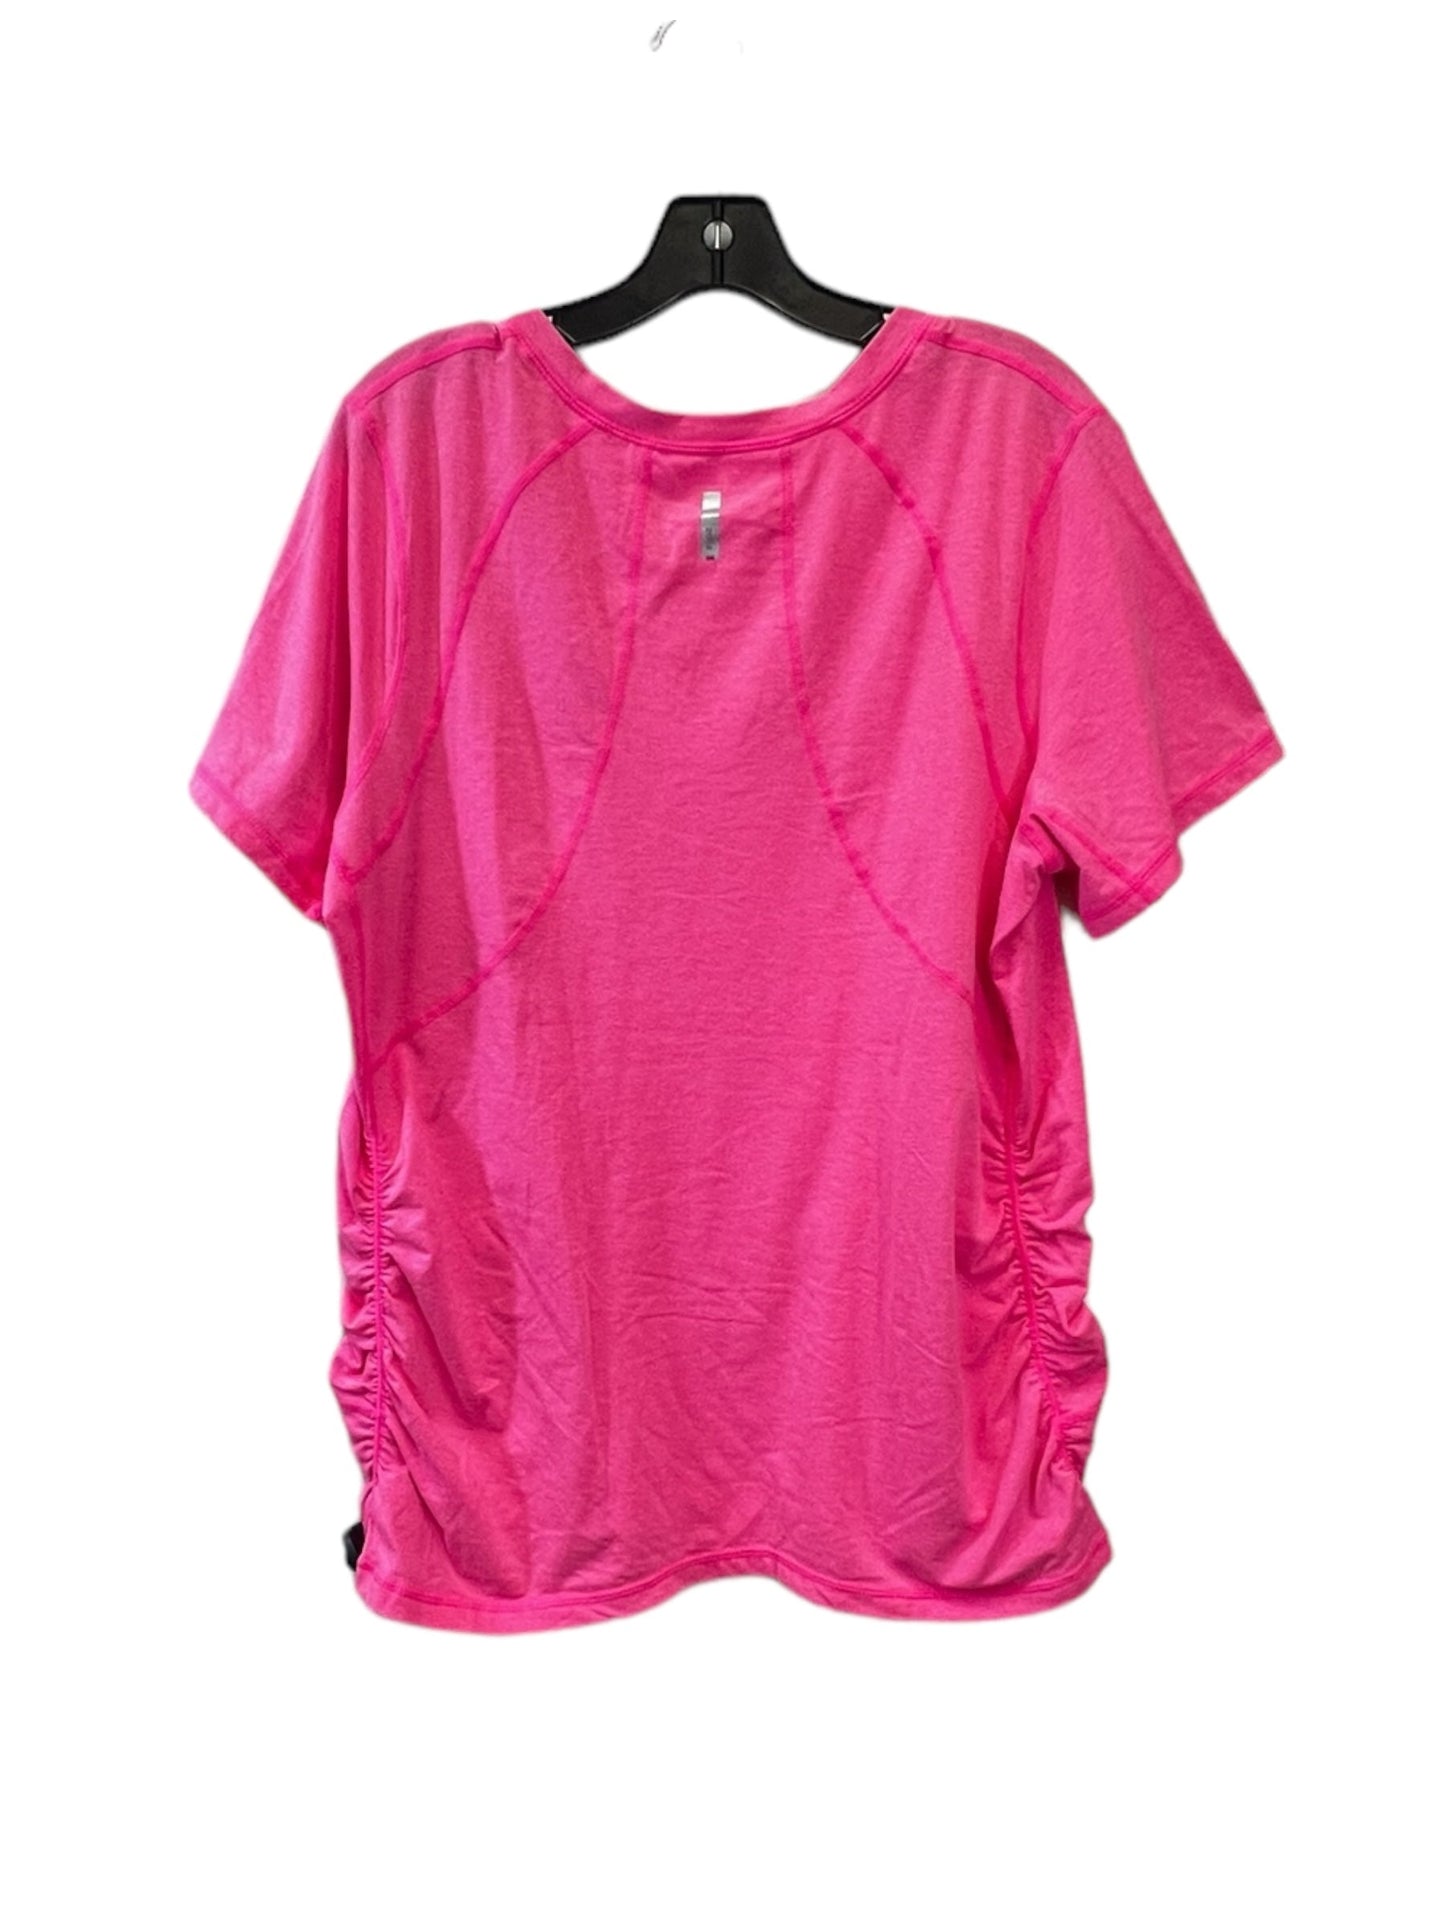 Pink Top Short Sleeve Basic Zella, Size 2x